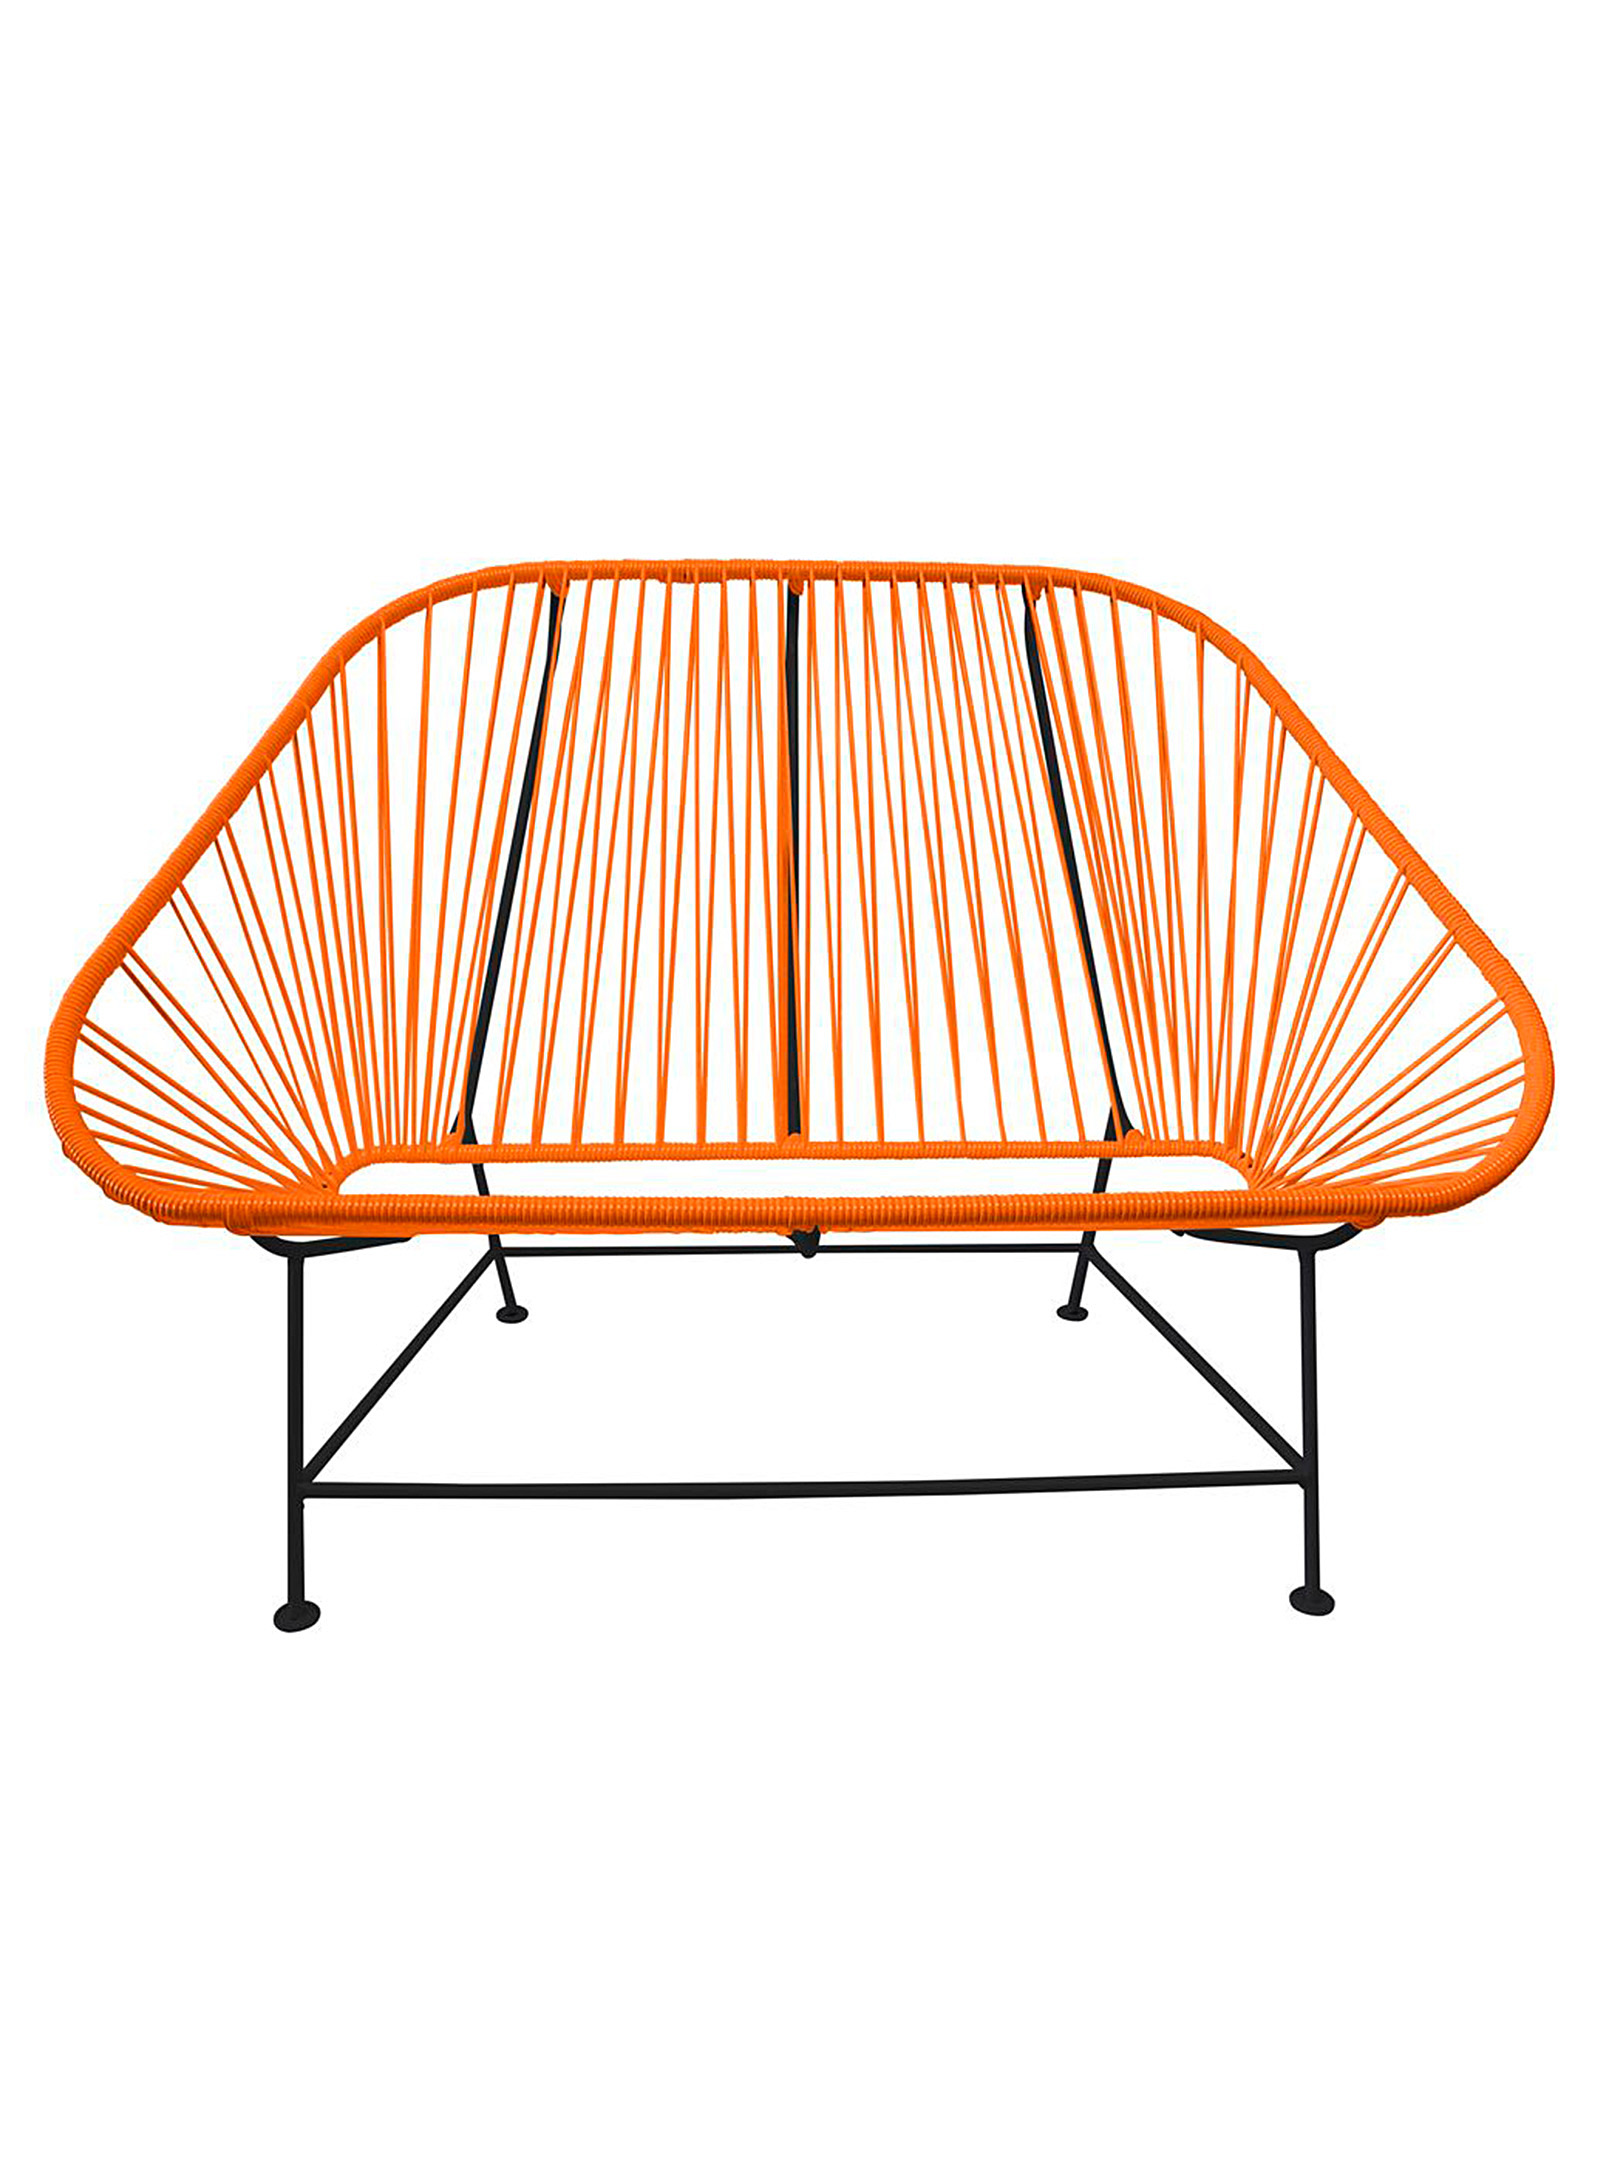 Simons Maison Inlove Outdoor Bench In Orange